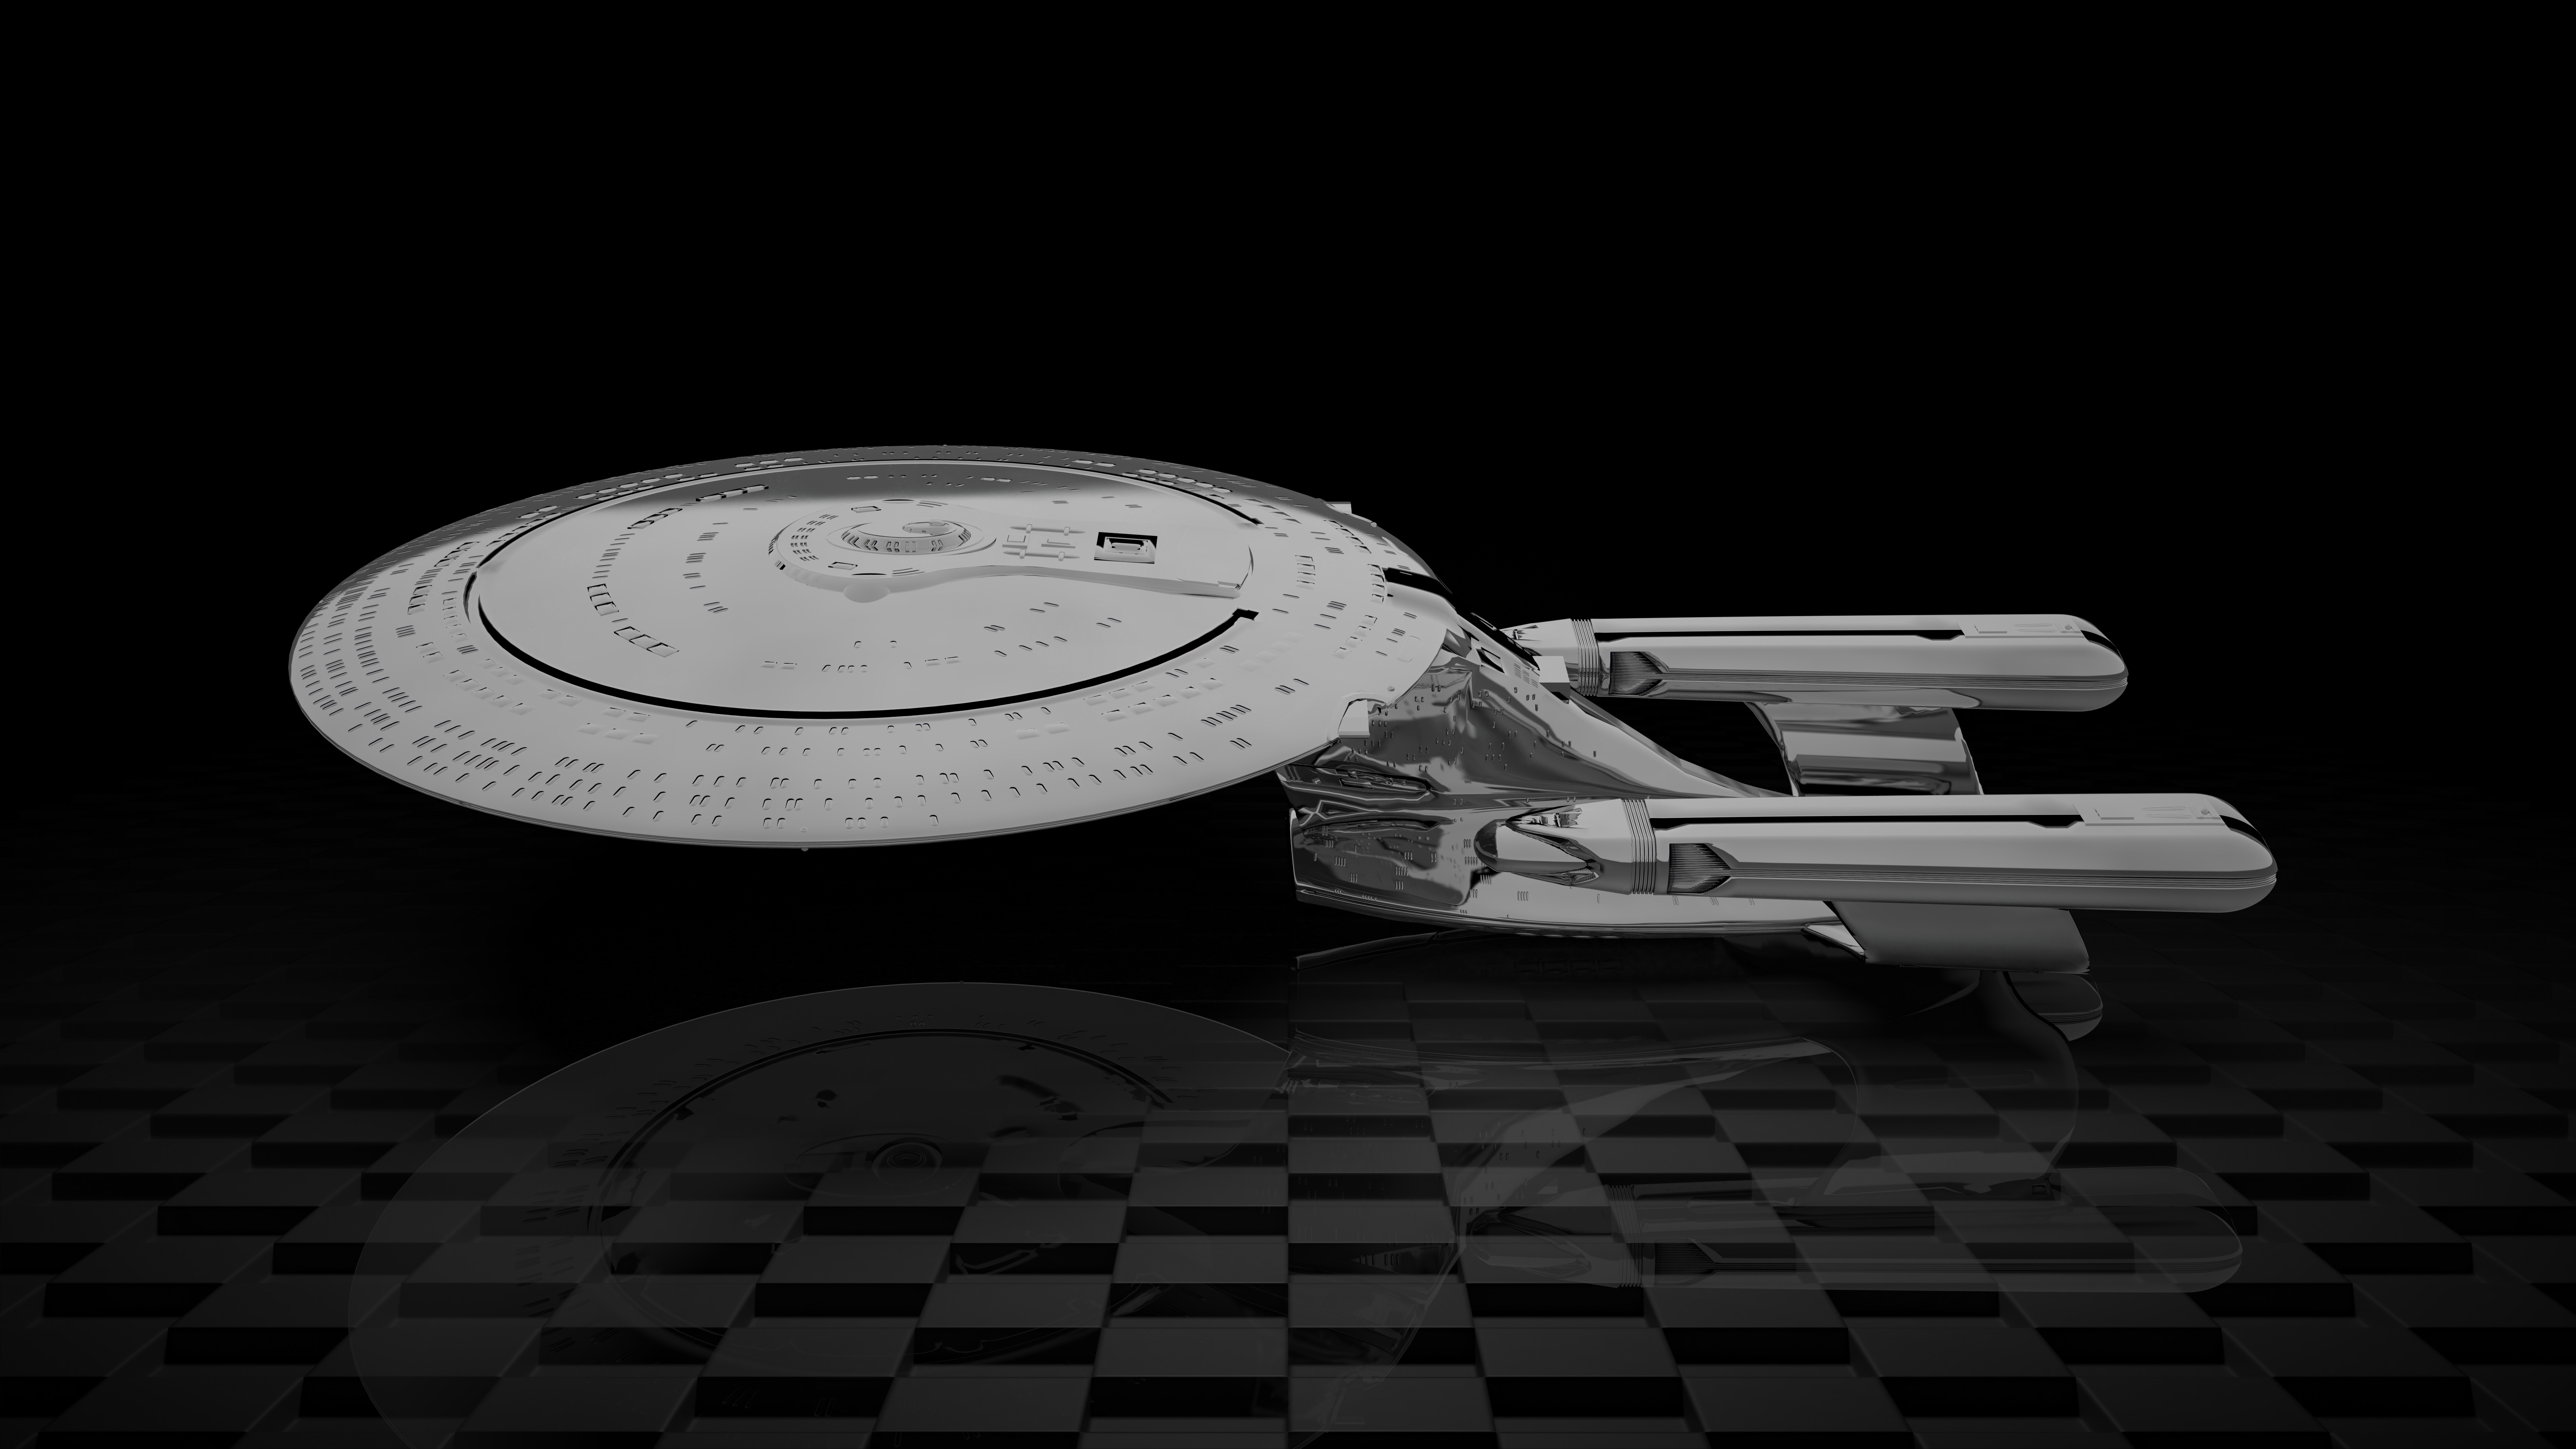 General 7680x4320 Star Trek Ships CGI Star Trek spaceship Galaxy Class Cruiser